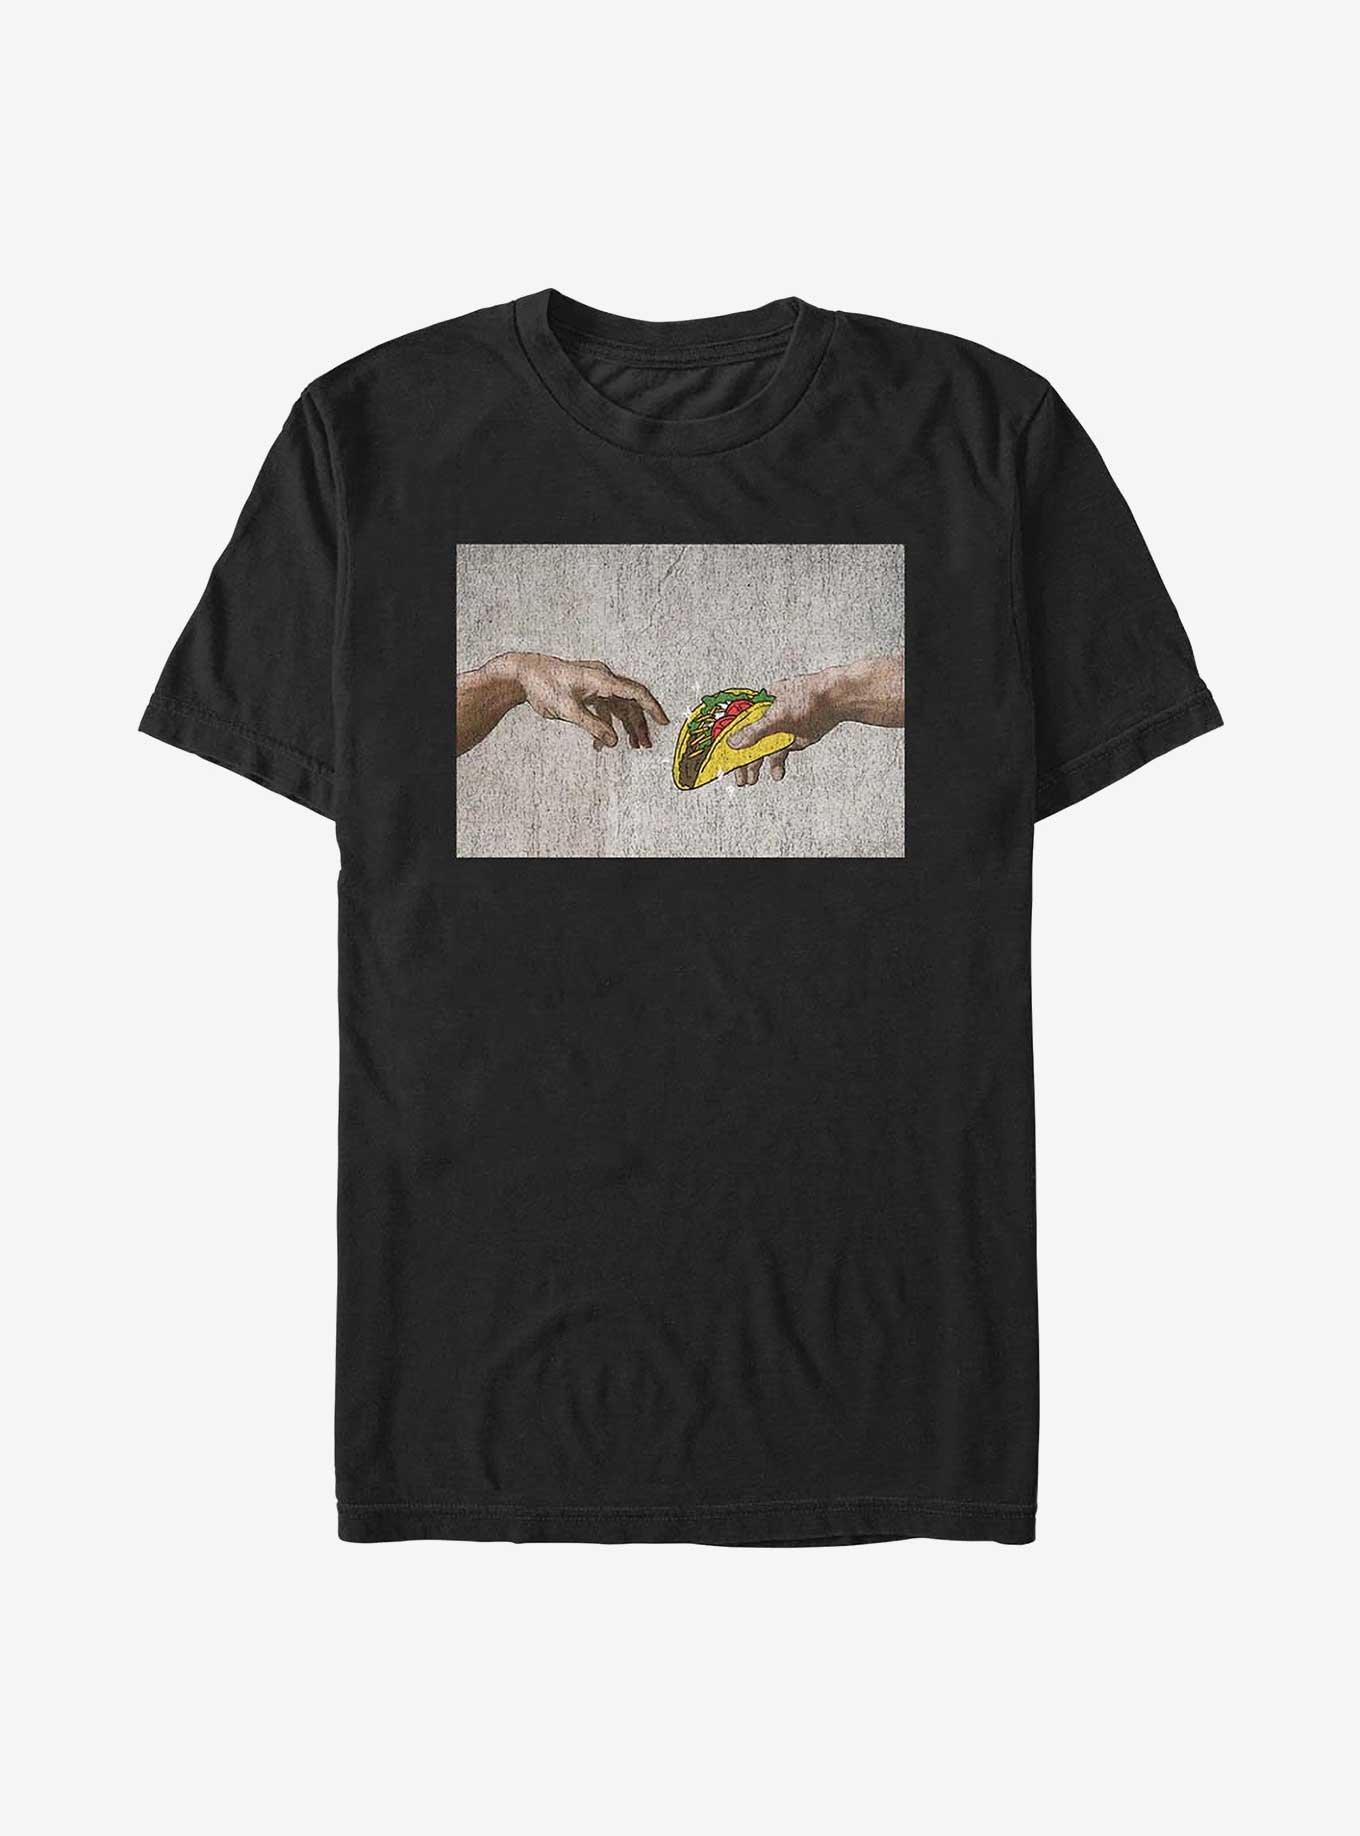 Creation Of Taco T-Shirt